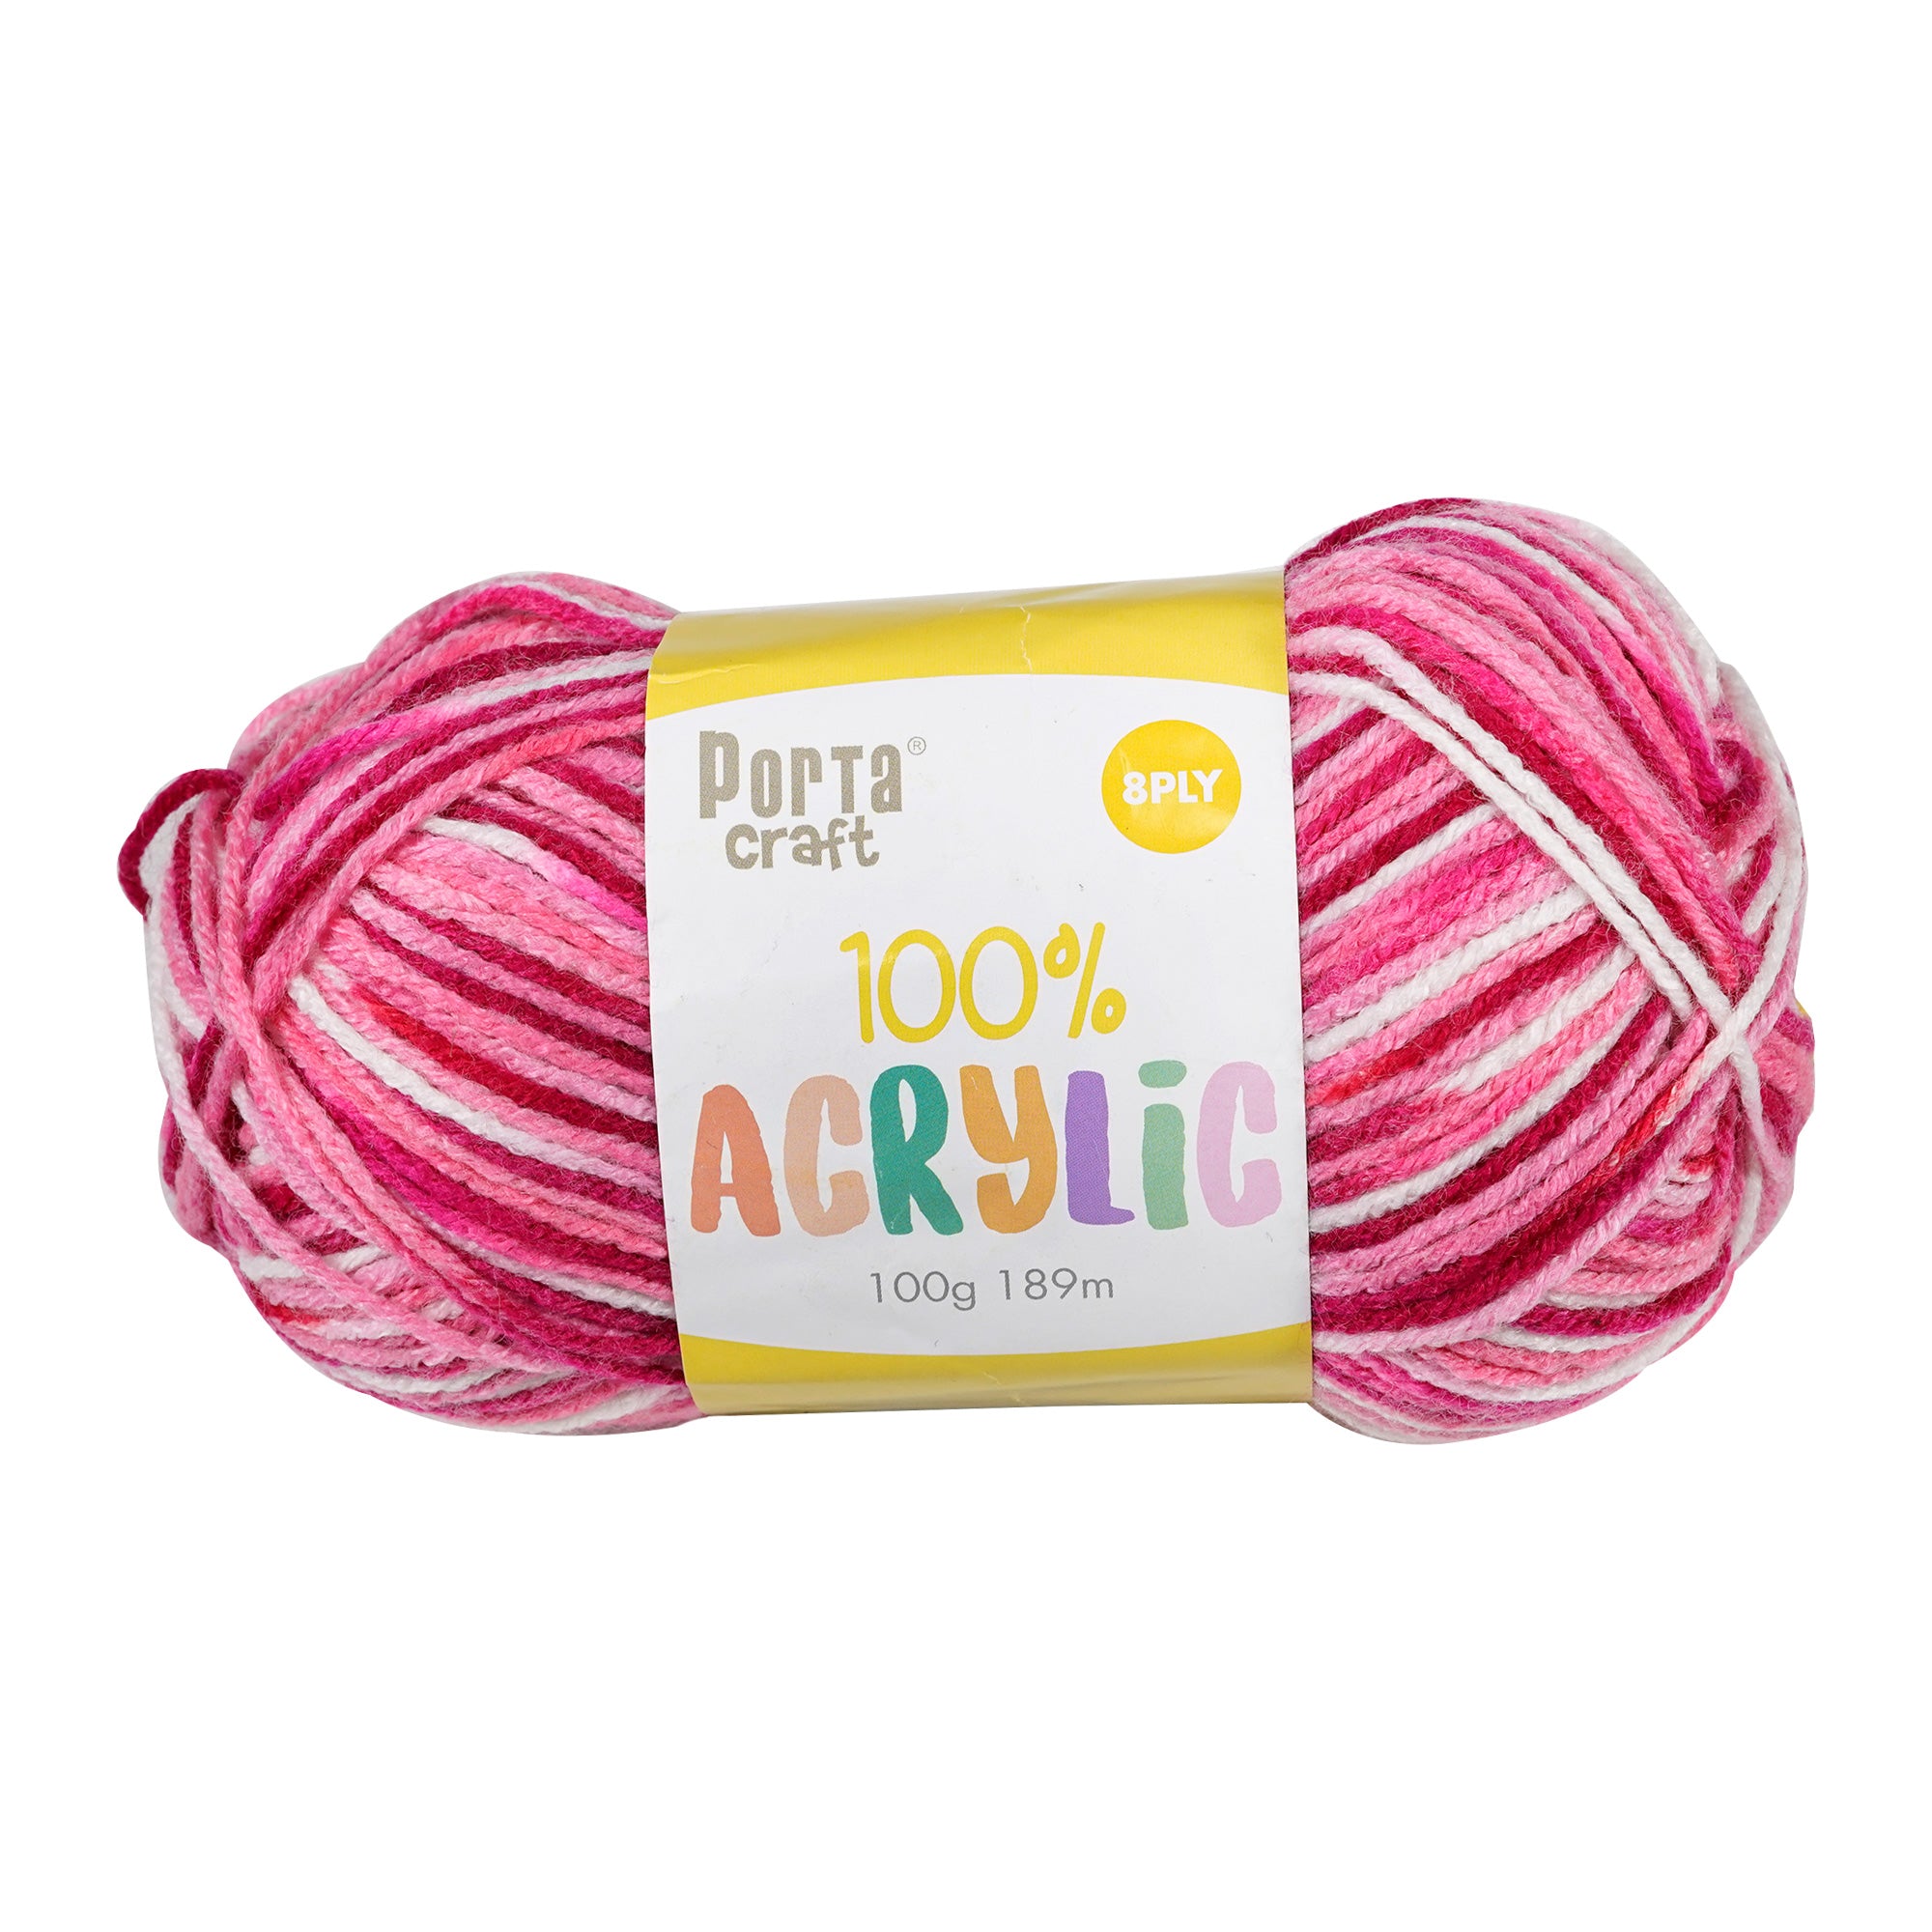 Porta Craft Acrylic Yarn 100% 100Gm 189M 8Ply Multi Rose